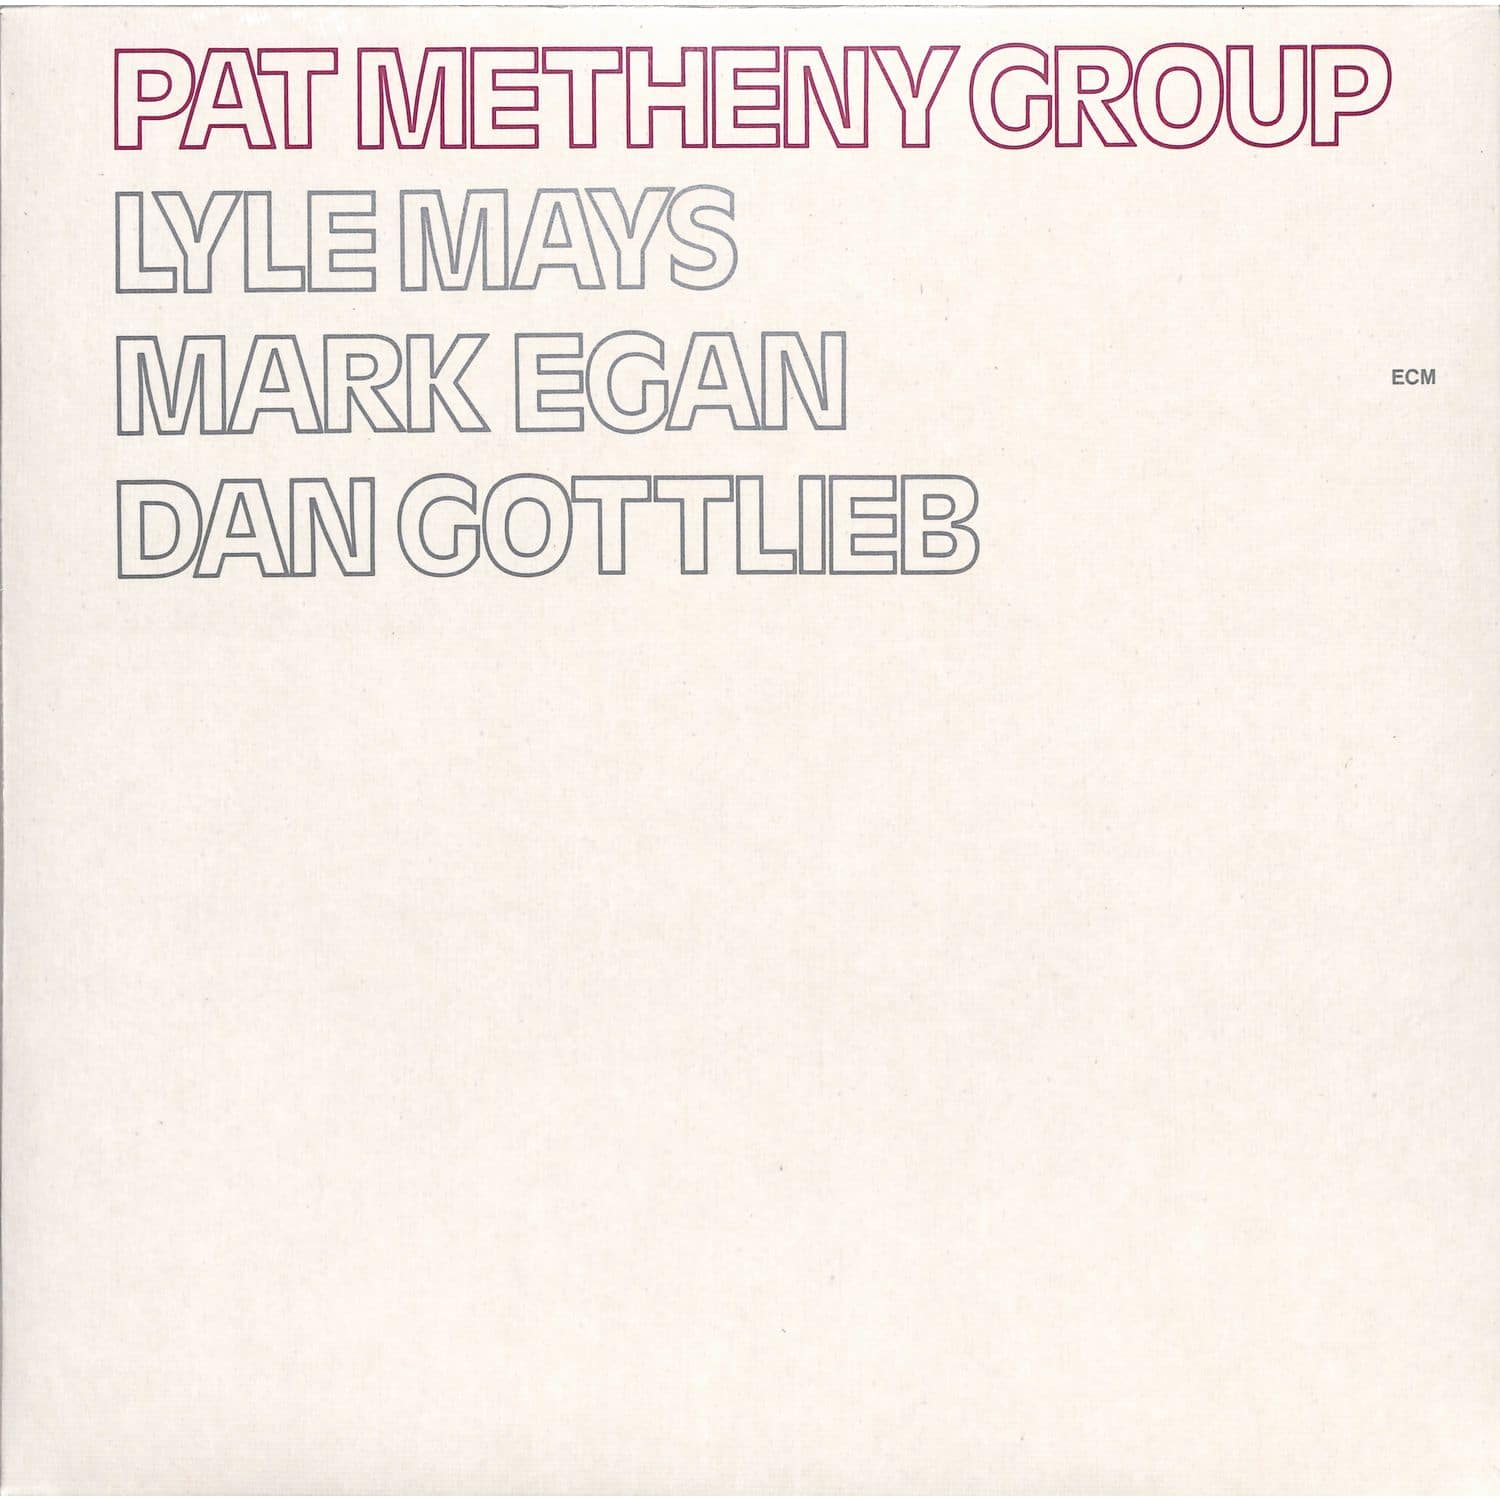 Pat Group Metheny - PAT METHENY GROUP 